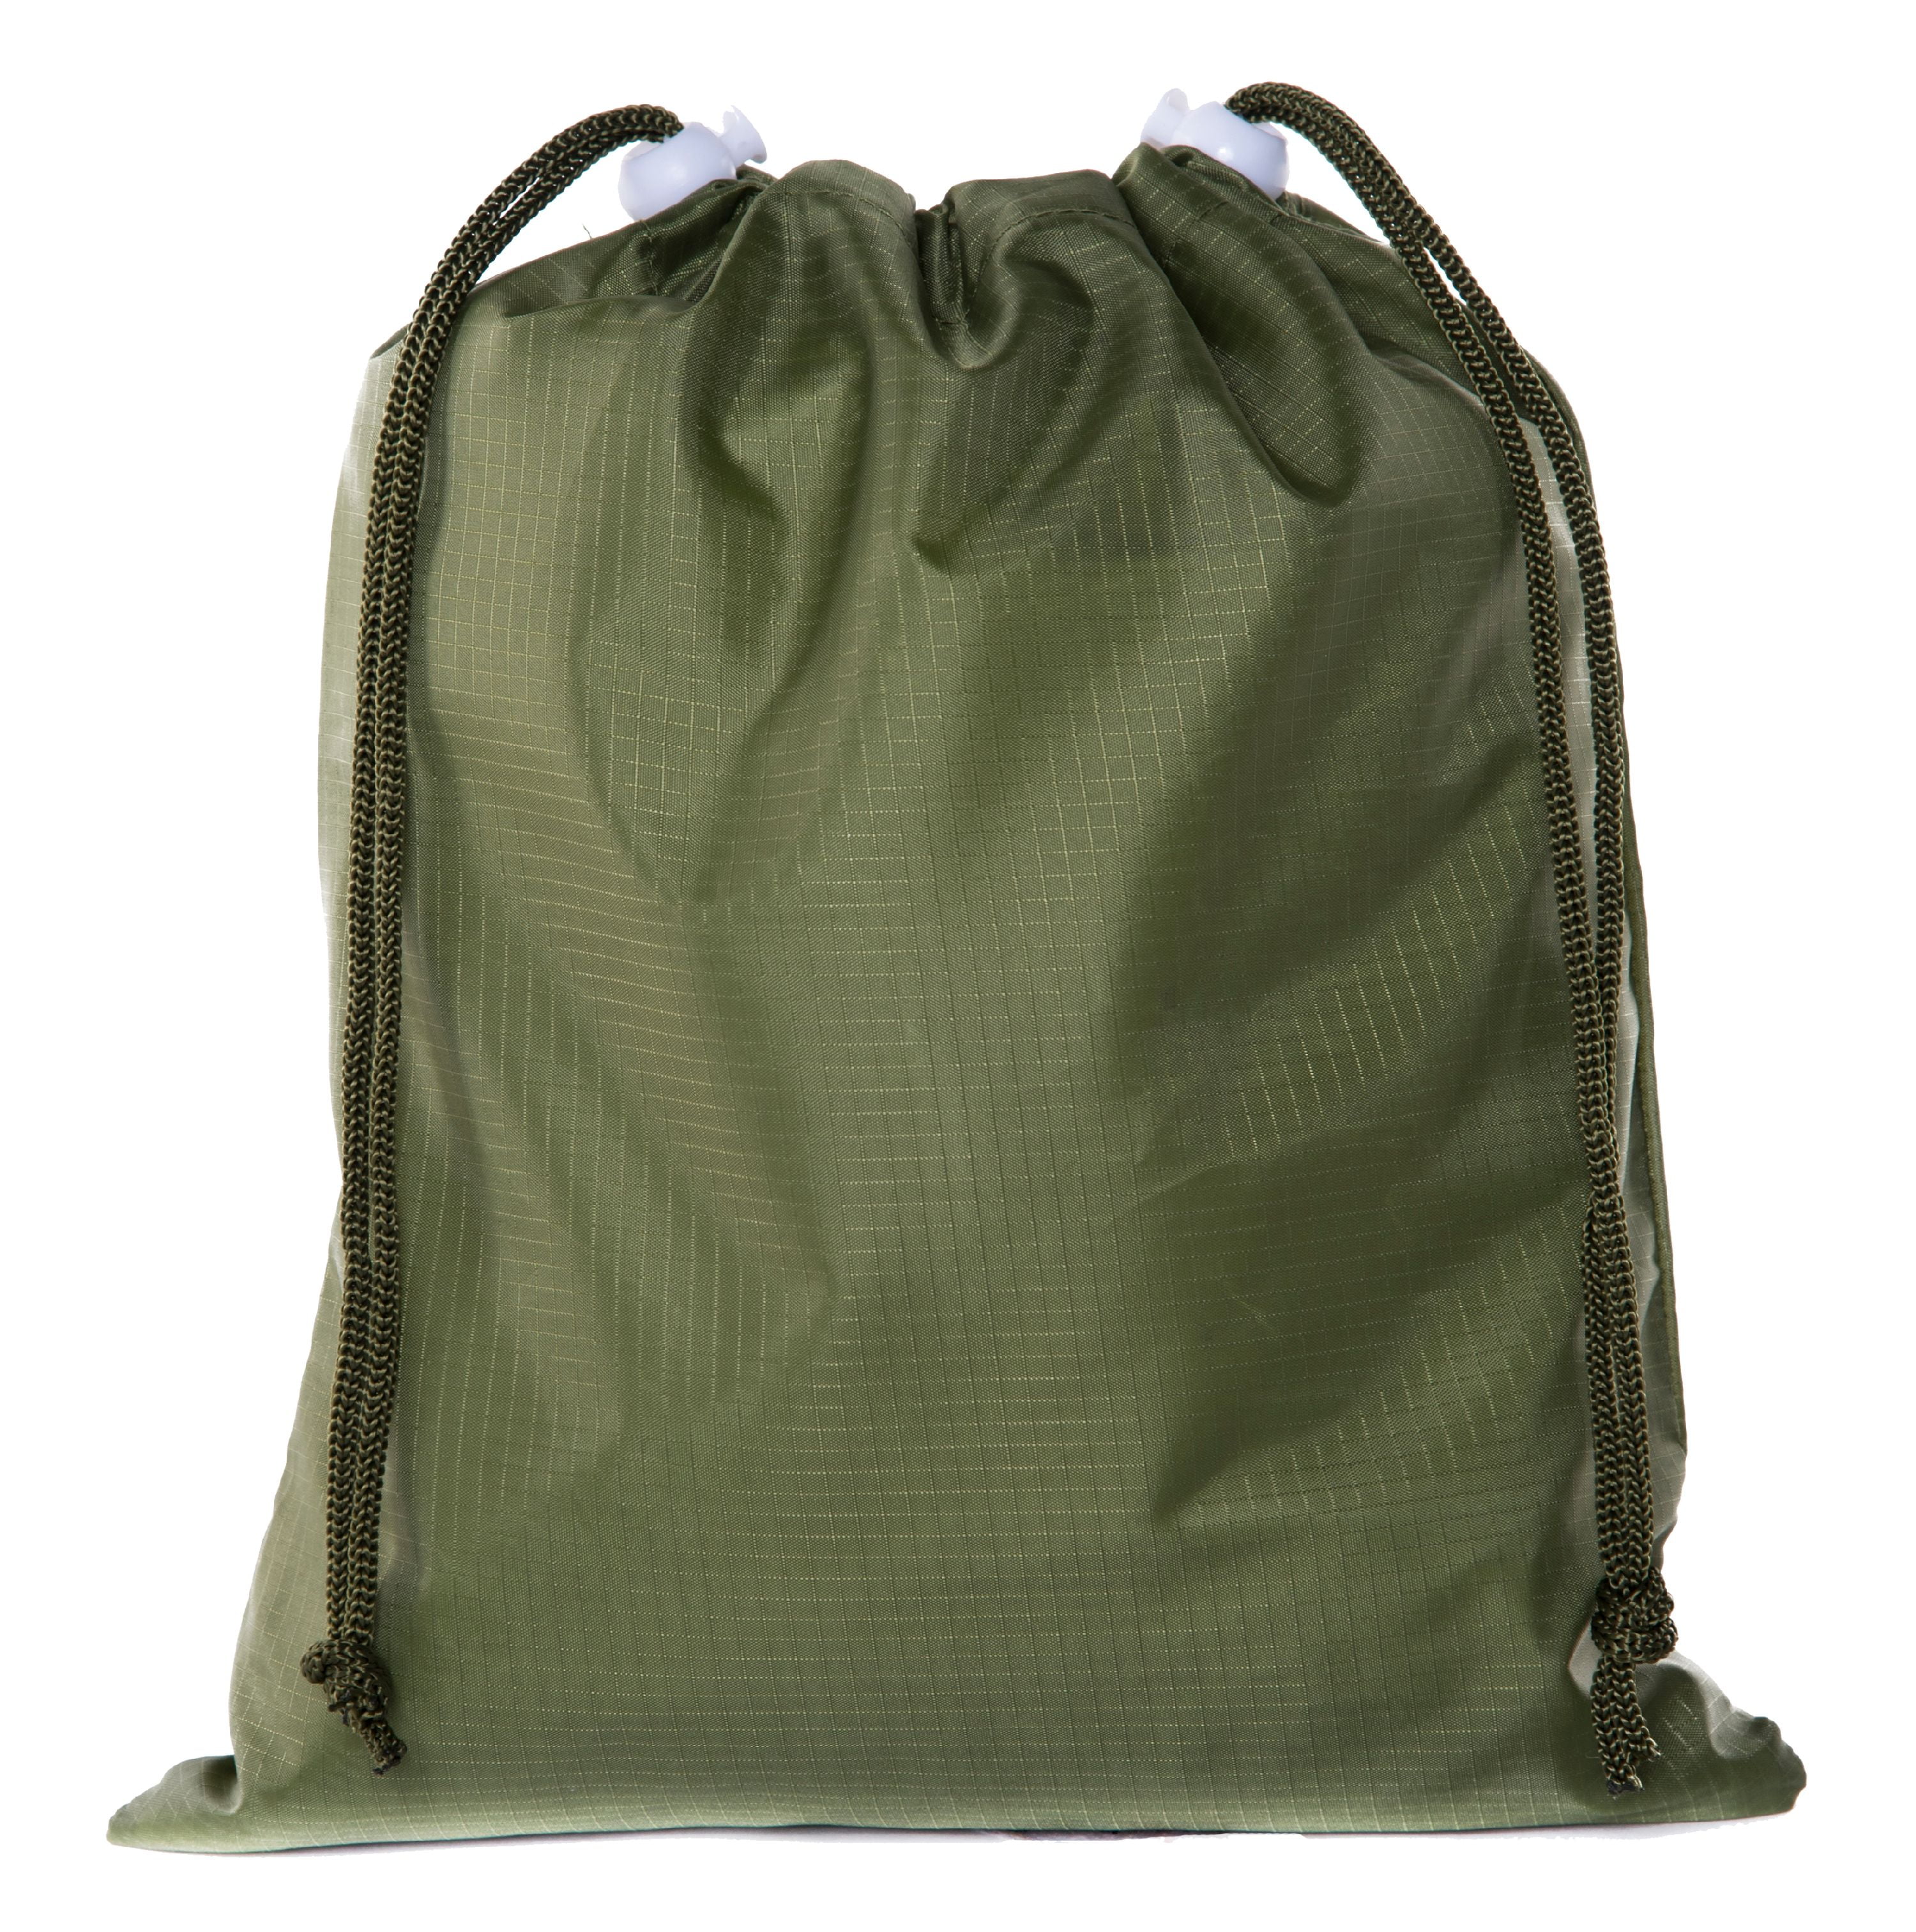 Drawstring Backpack Flaming Soccer Ball Shoulder Bags